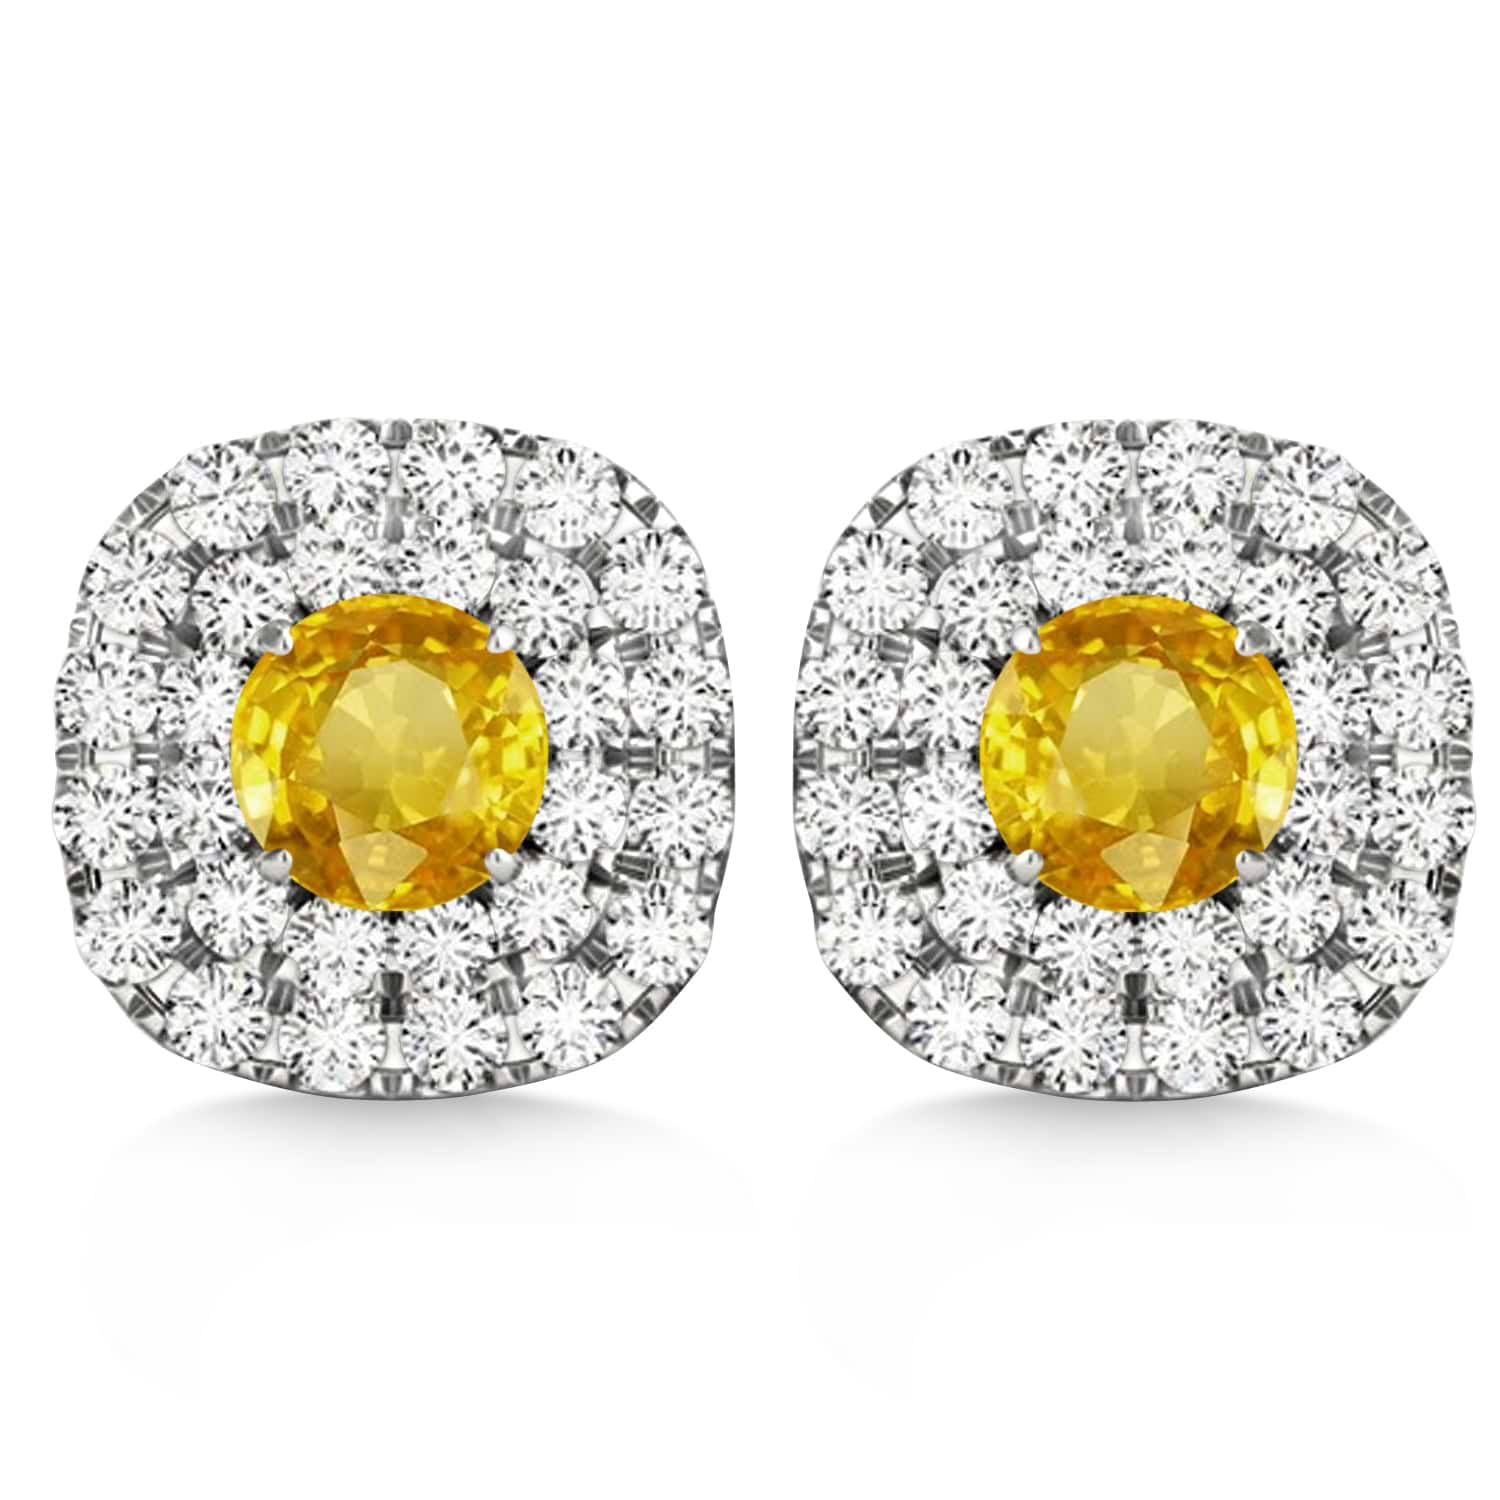 Double Halo Yellow Sapphire & Diamond Earrings 14k White Gold (1.36ct)